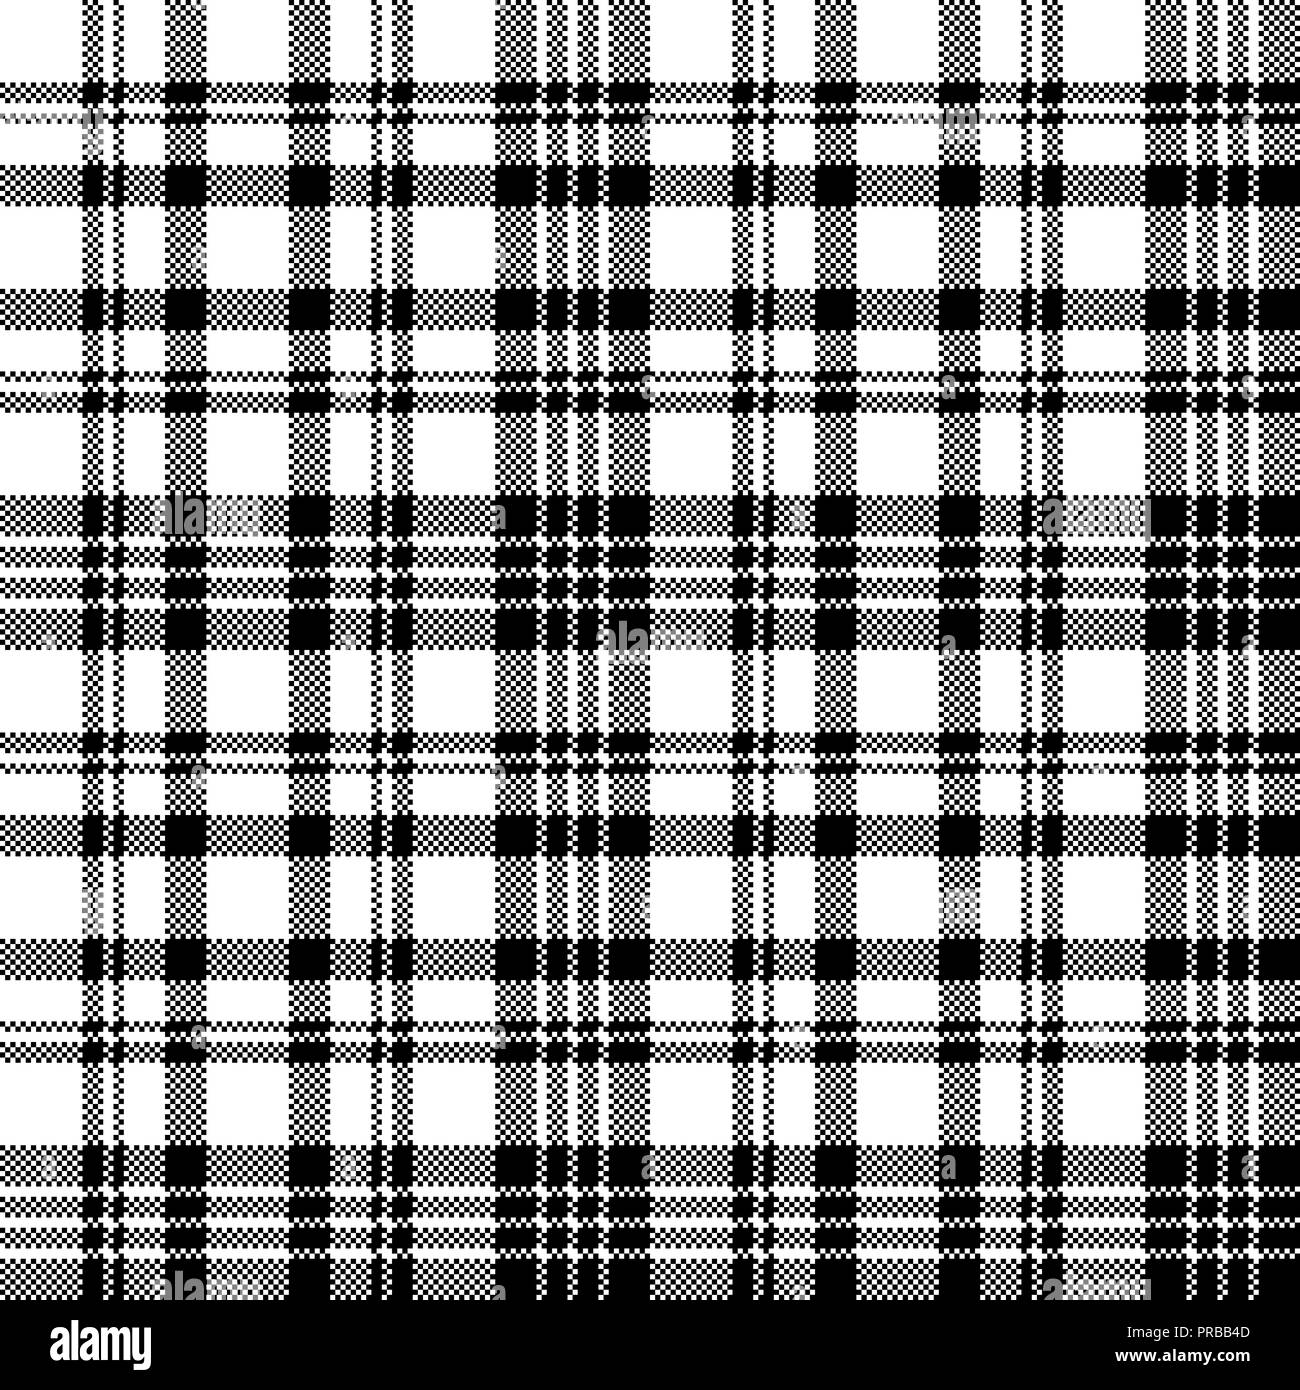 Abstract plaid pattern pixel transparent noir blanc. Vector illustration  Image Vectorielle Stock - Alamy